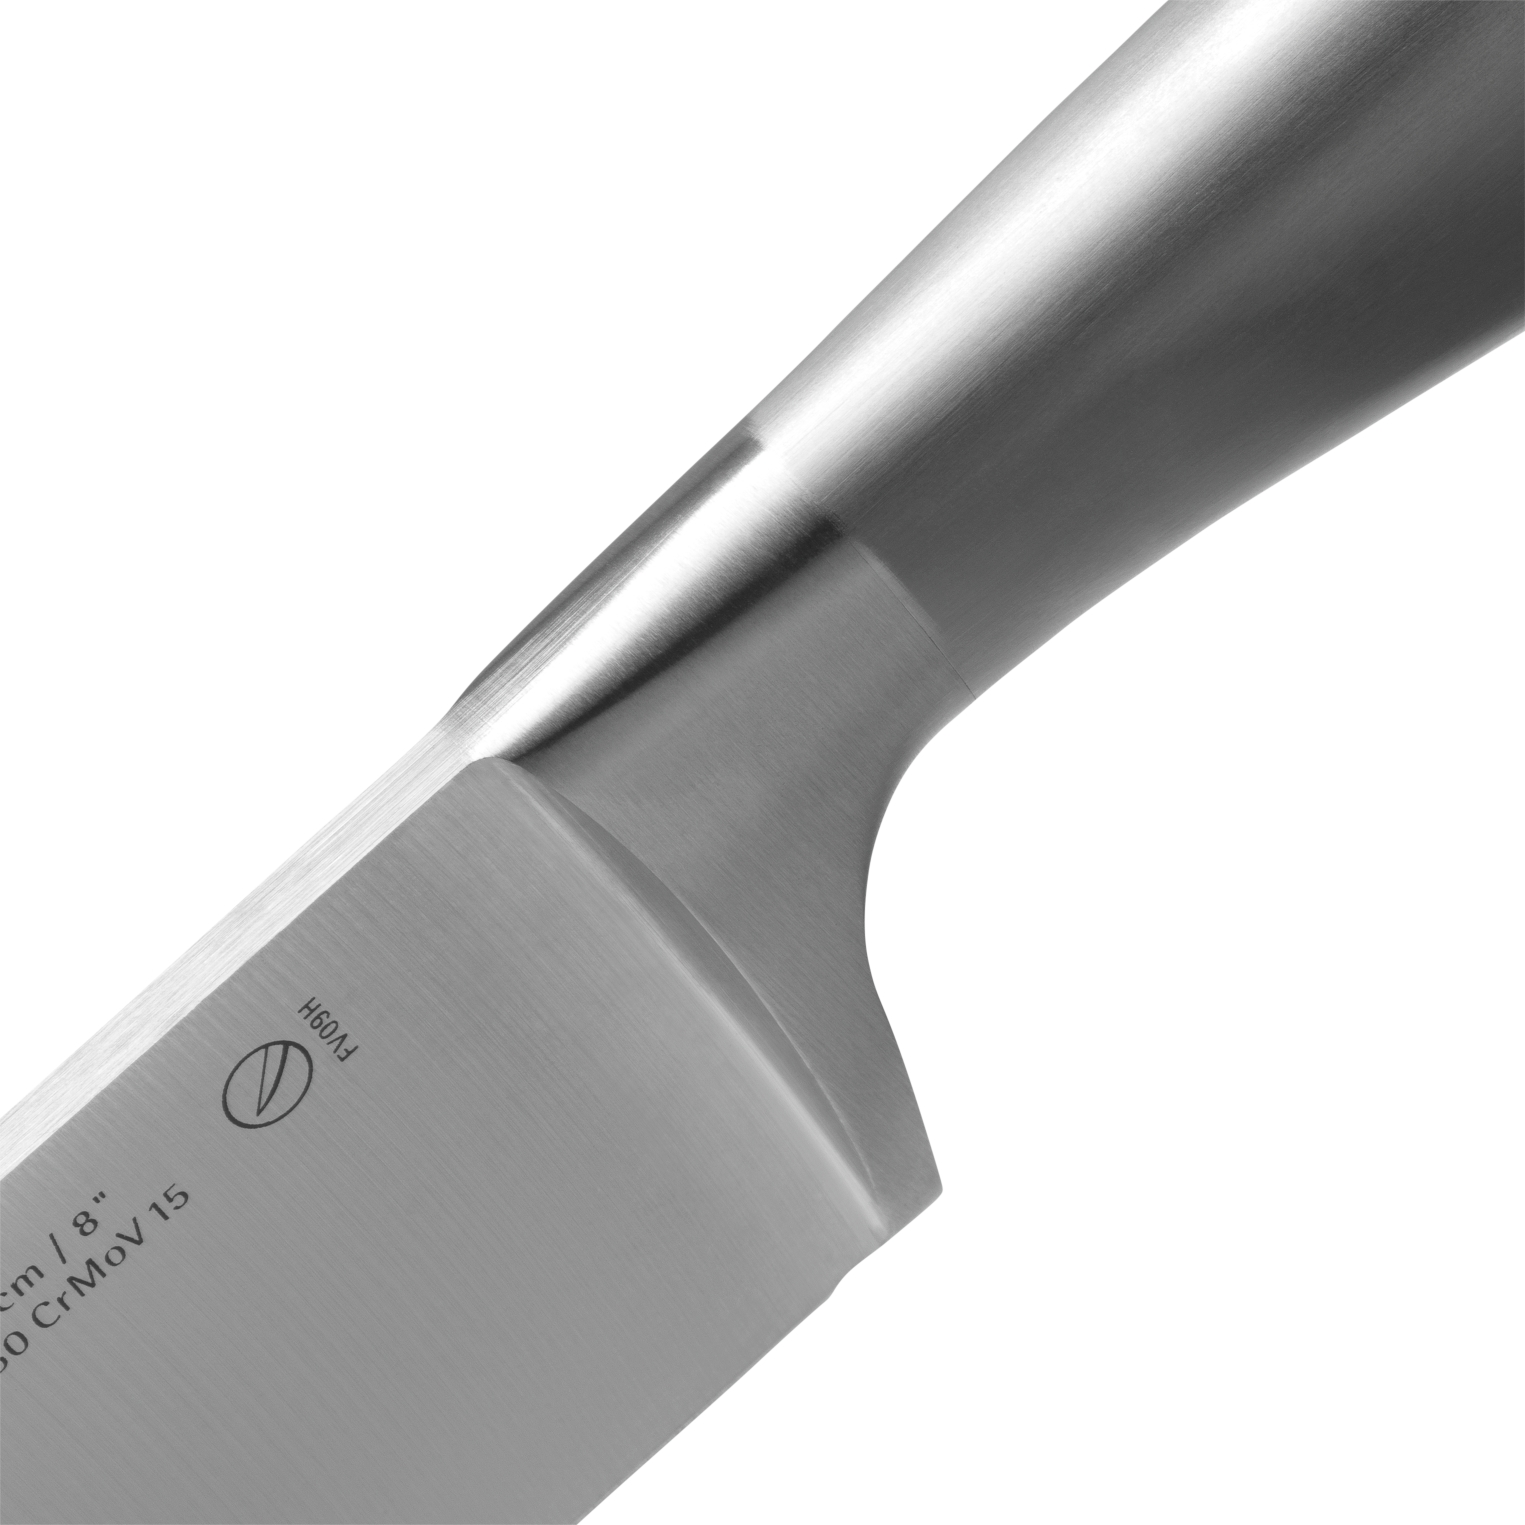 WMF Grand Gourmet Çok Amaçlı Bıçak 12cm